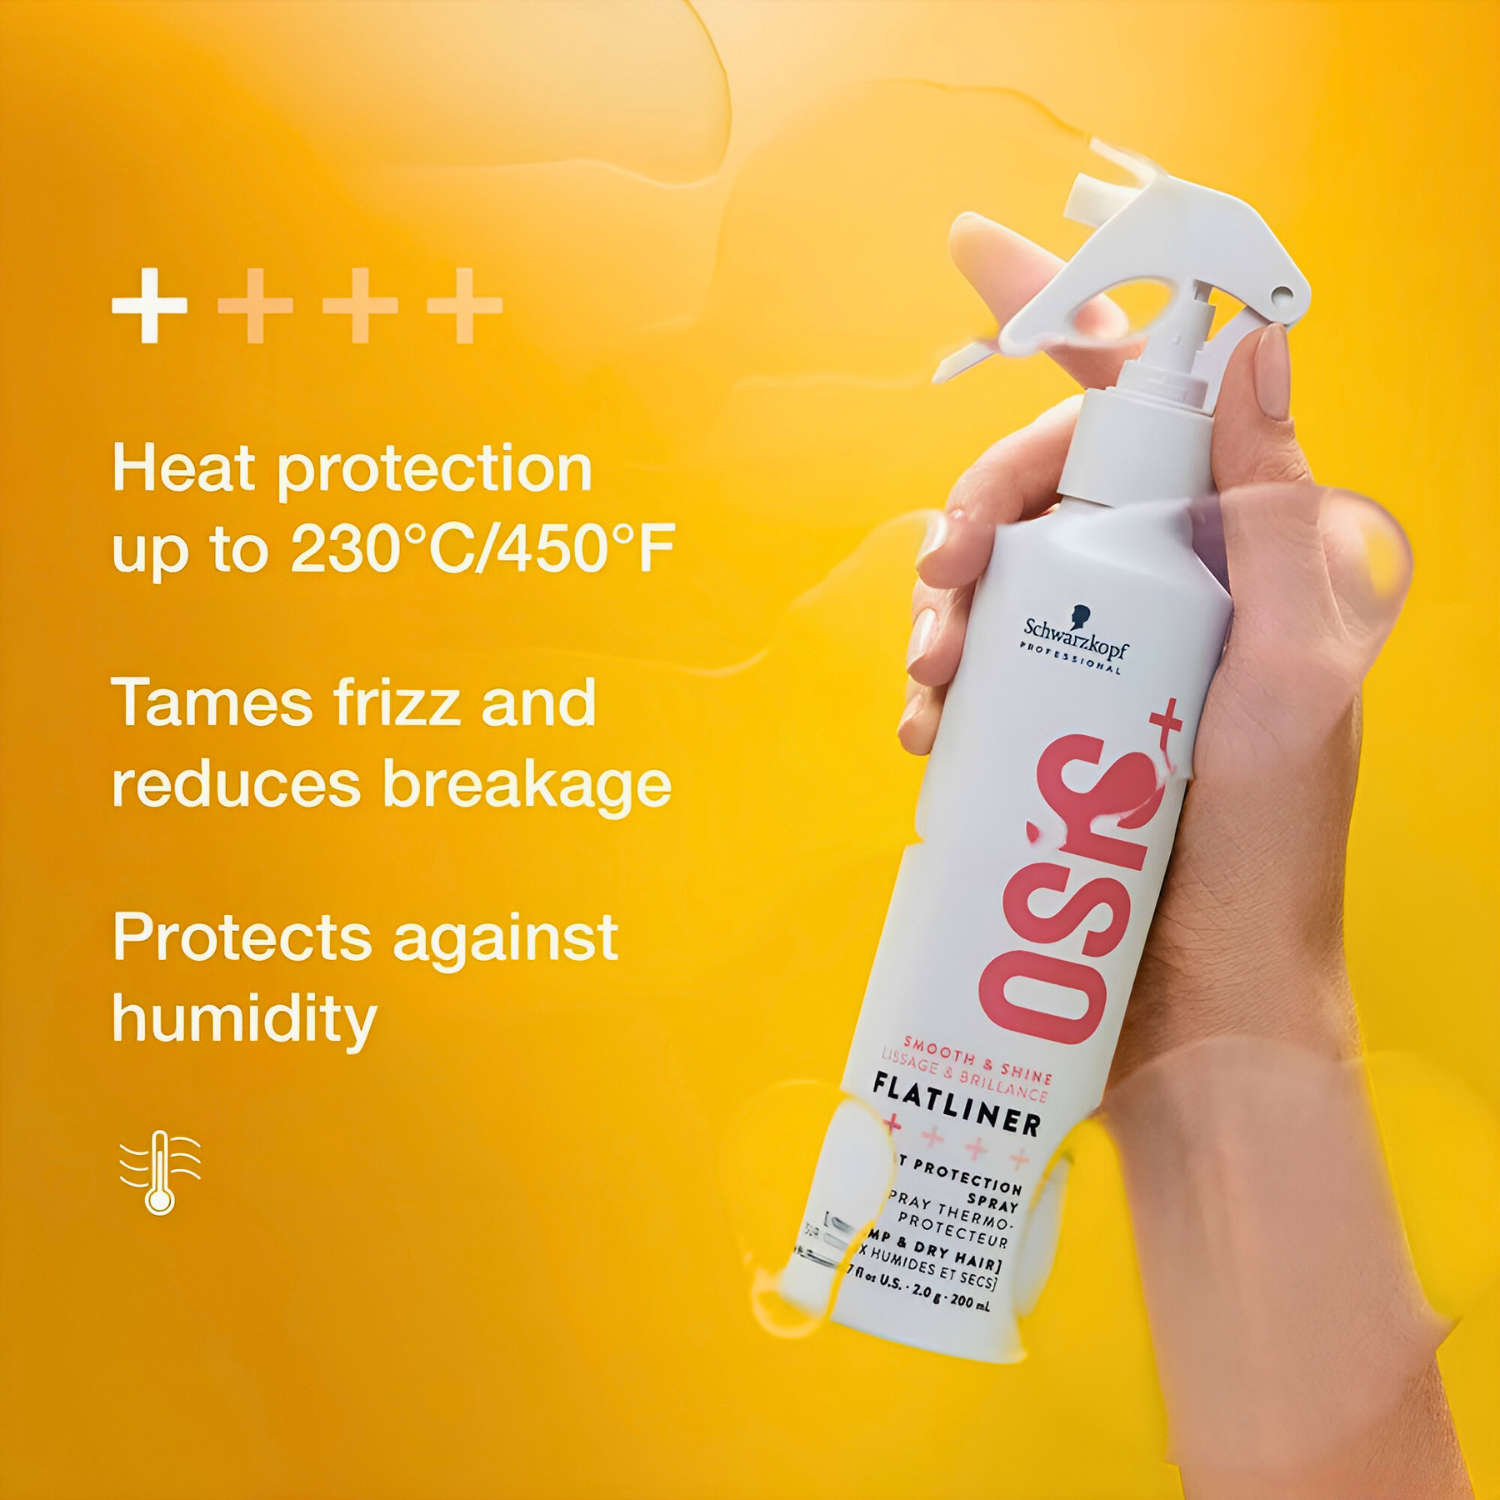 OSIS Flatliner Heat Protection Spray 200ml